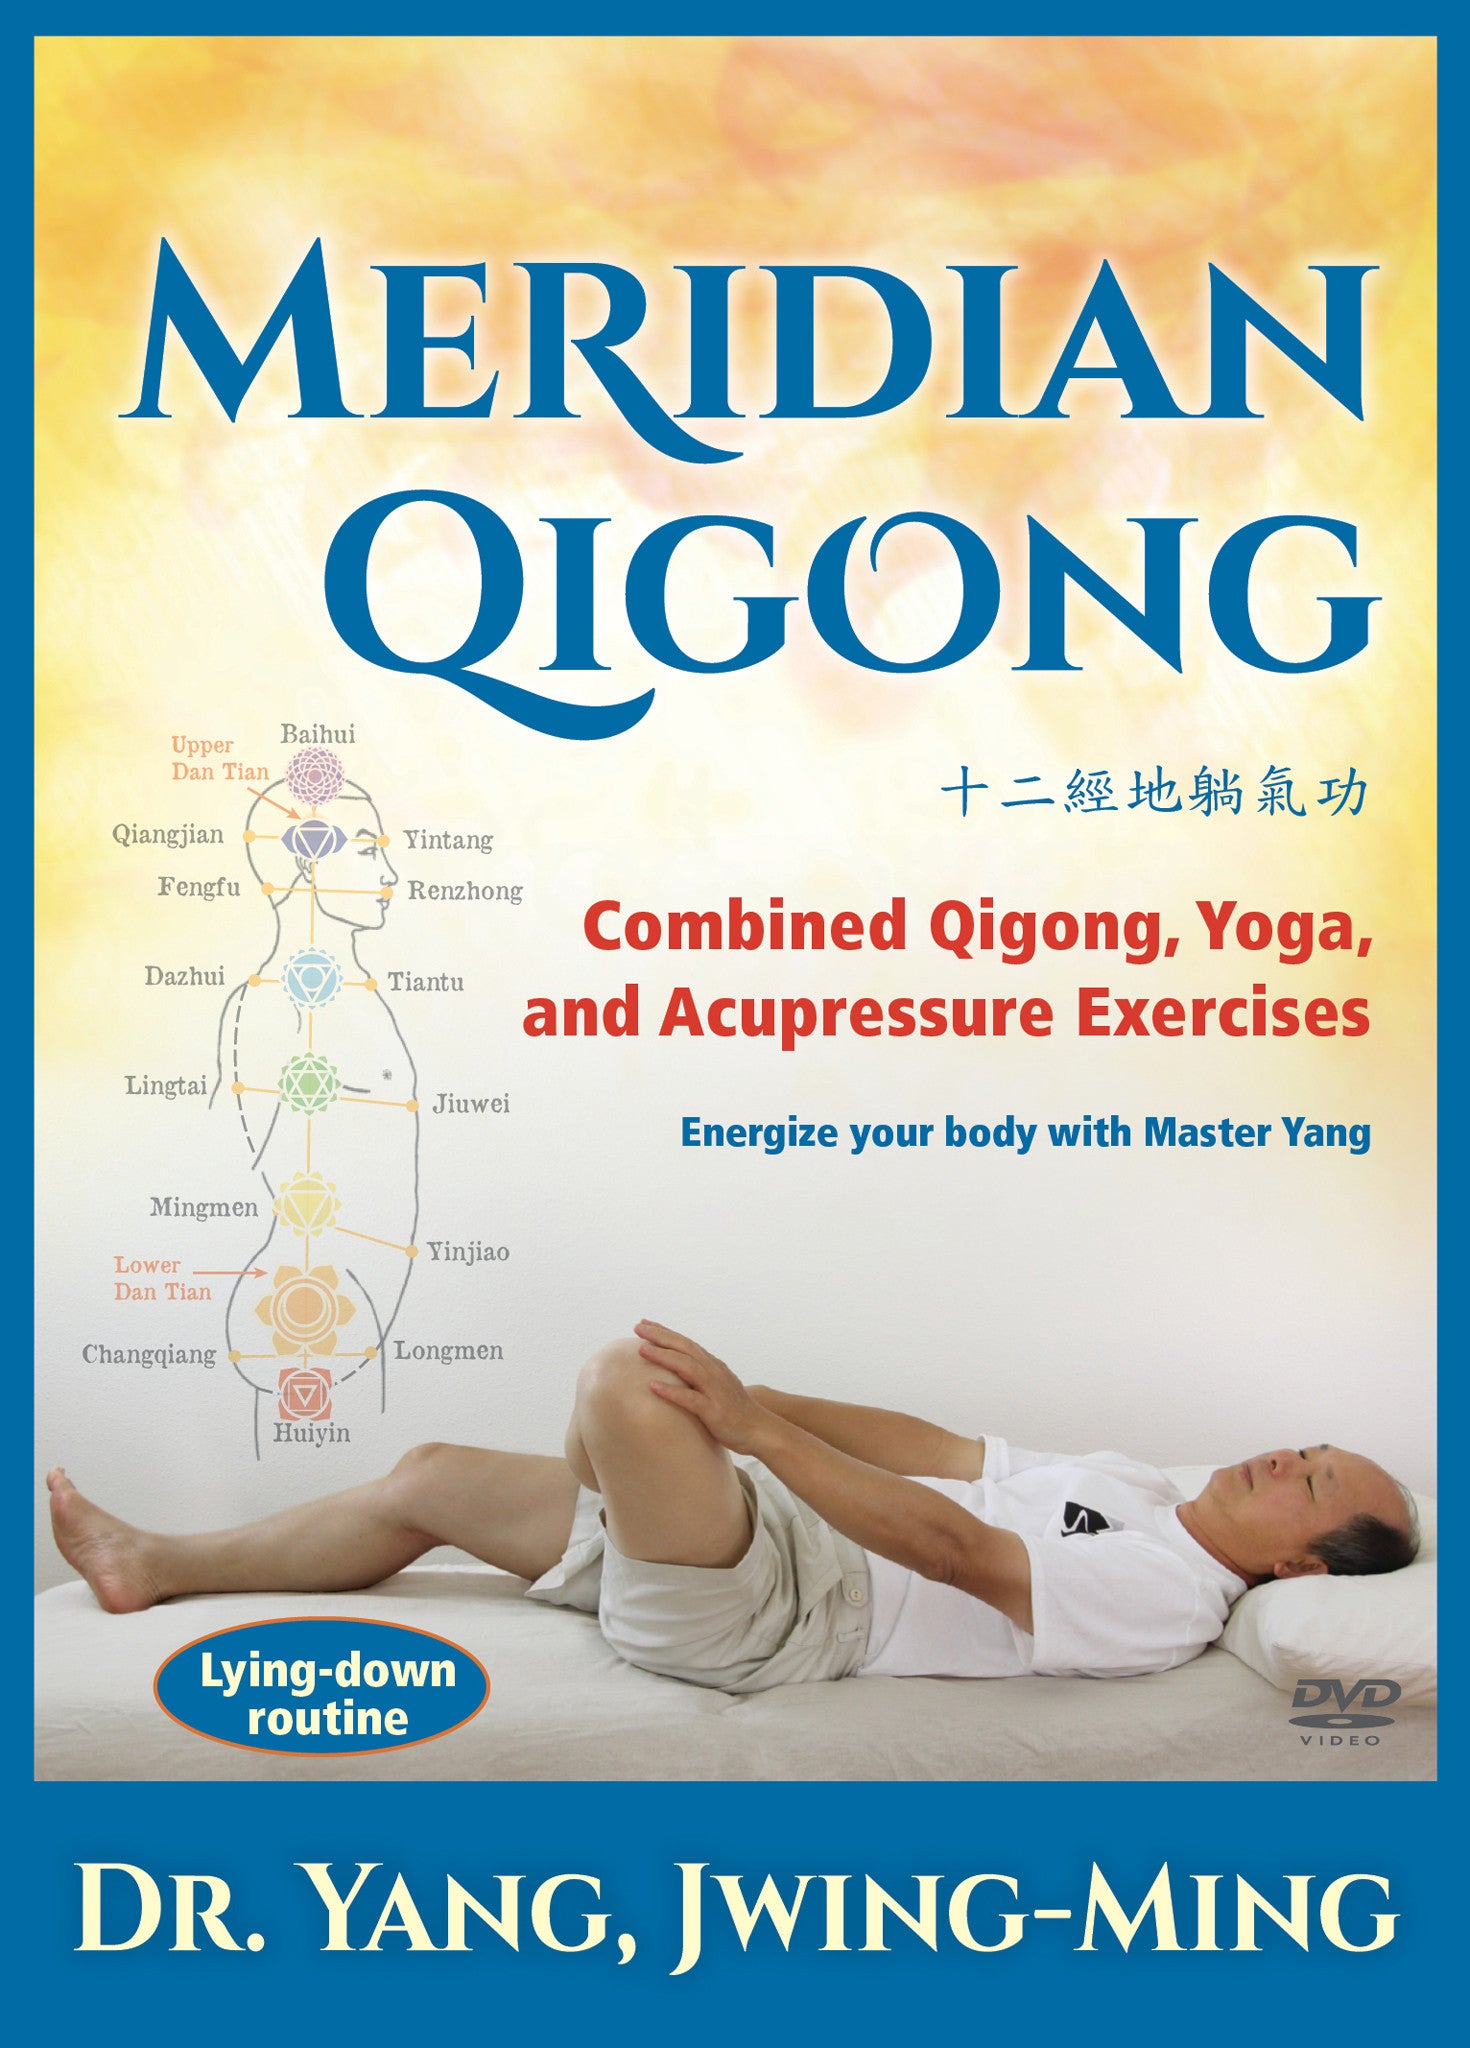 Meridian Qigong DVD by Dr. Yang, Jwing-Ming - Budovideos Inc